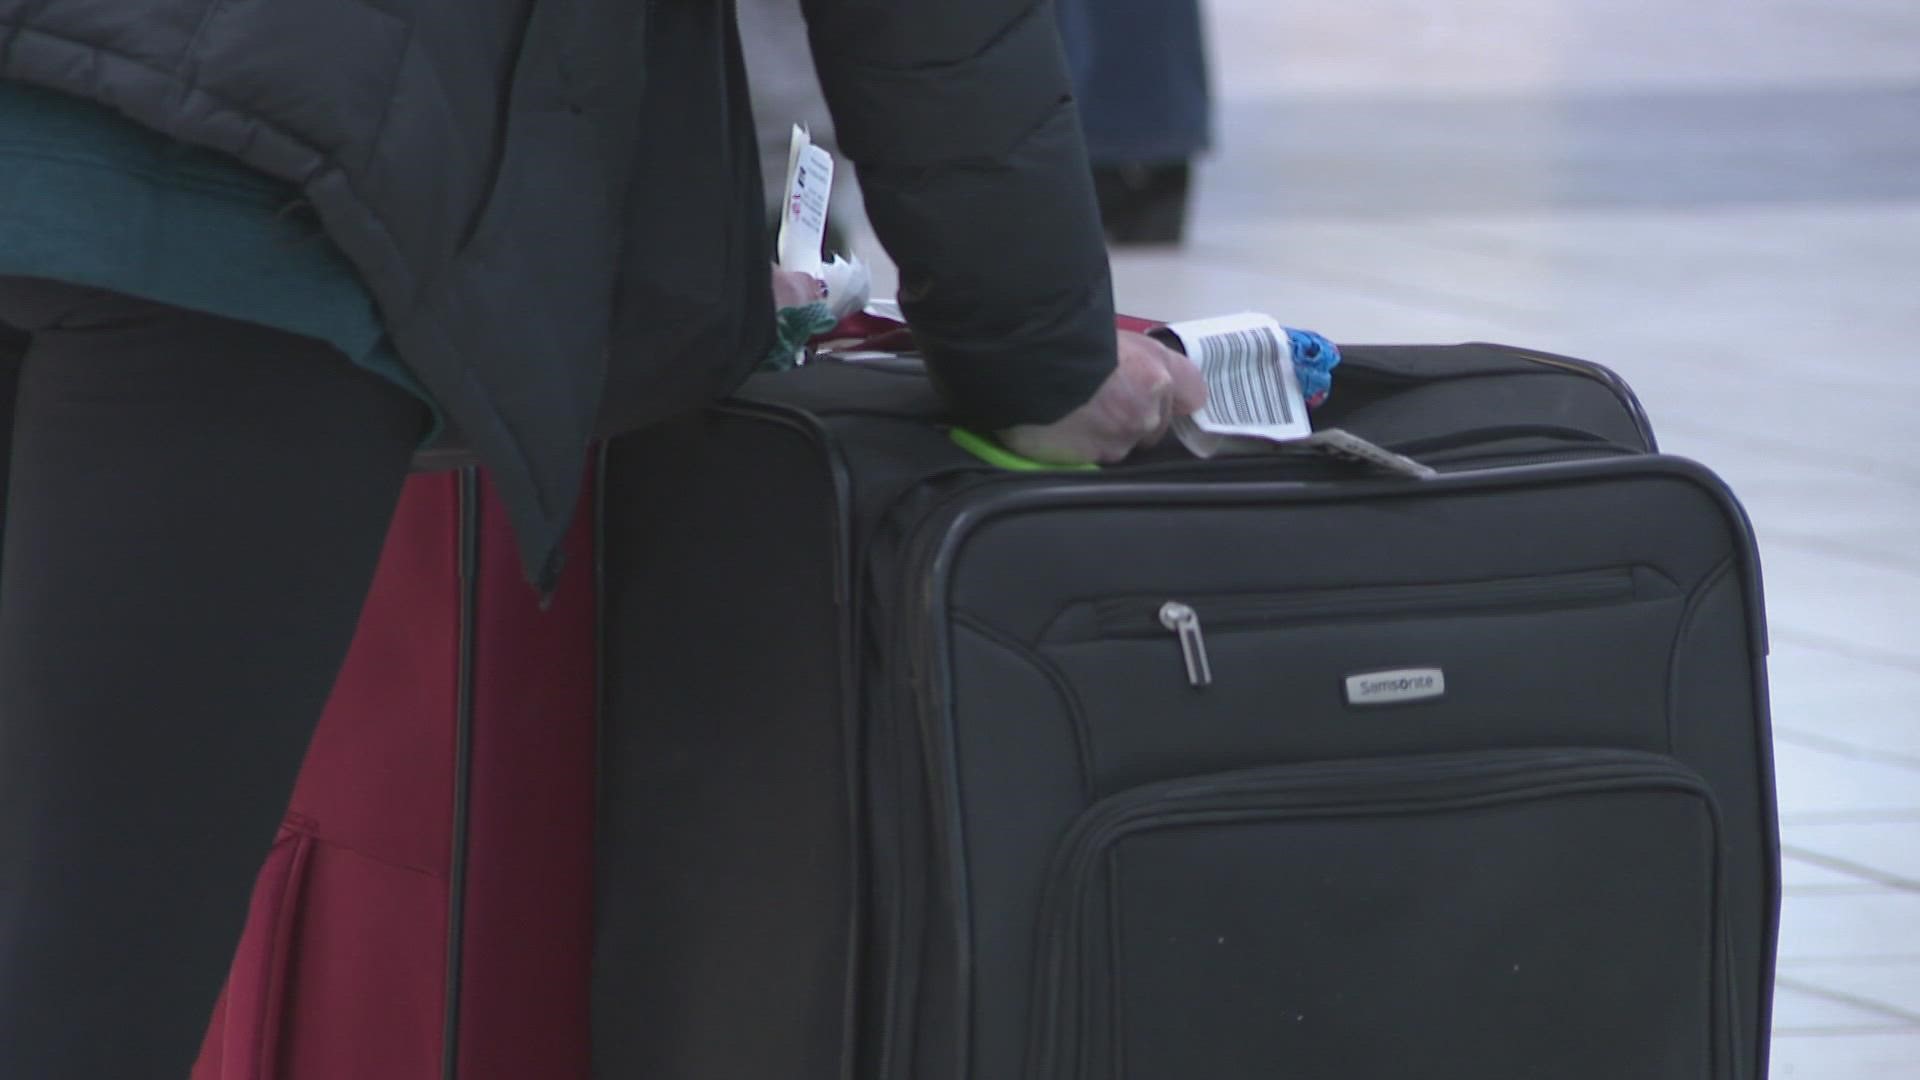 Luggage no longer piled up at Lambert, travel delays continue